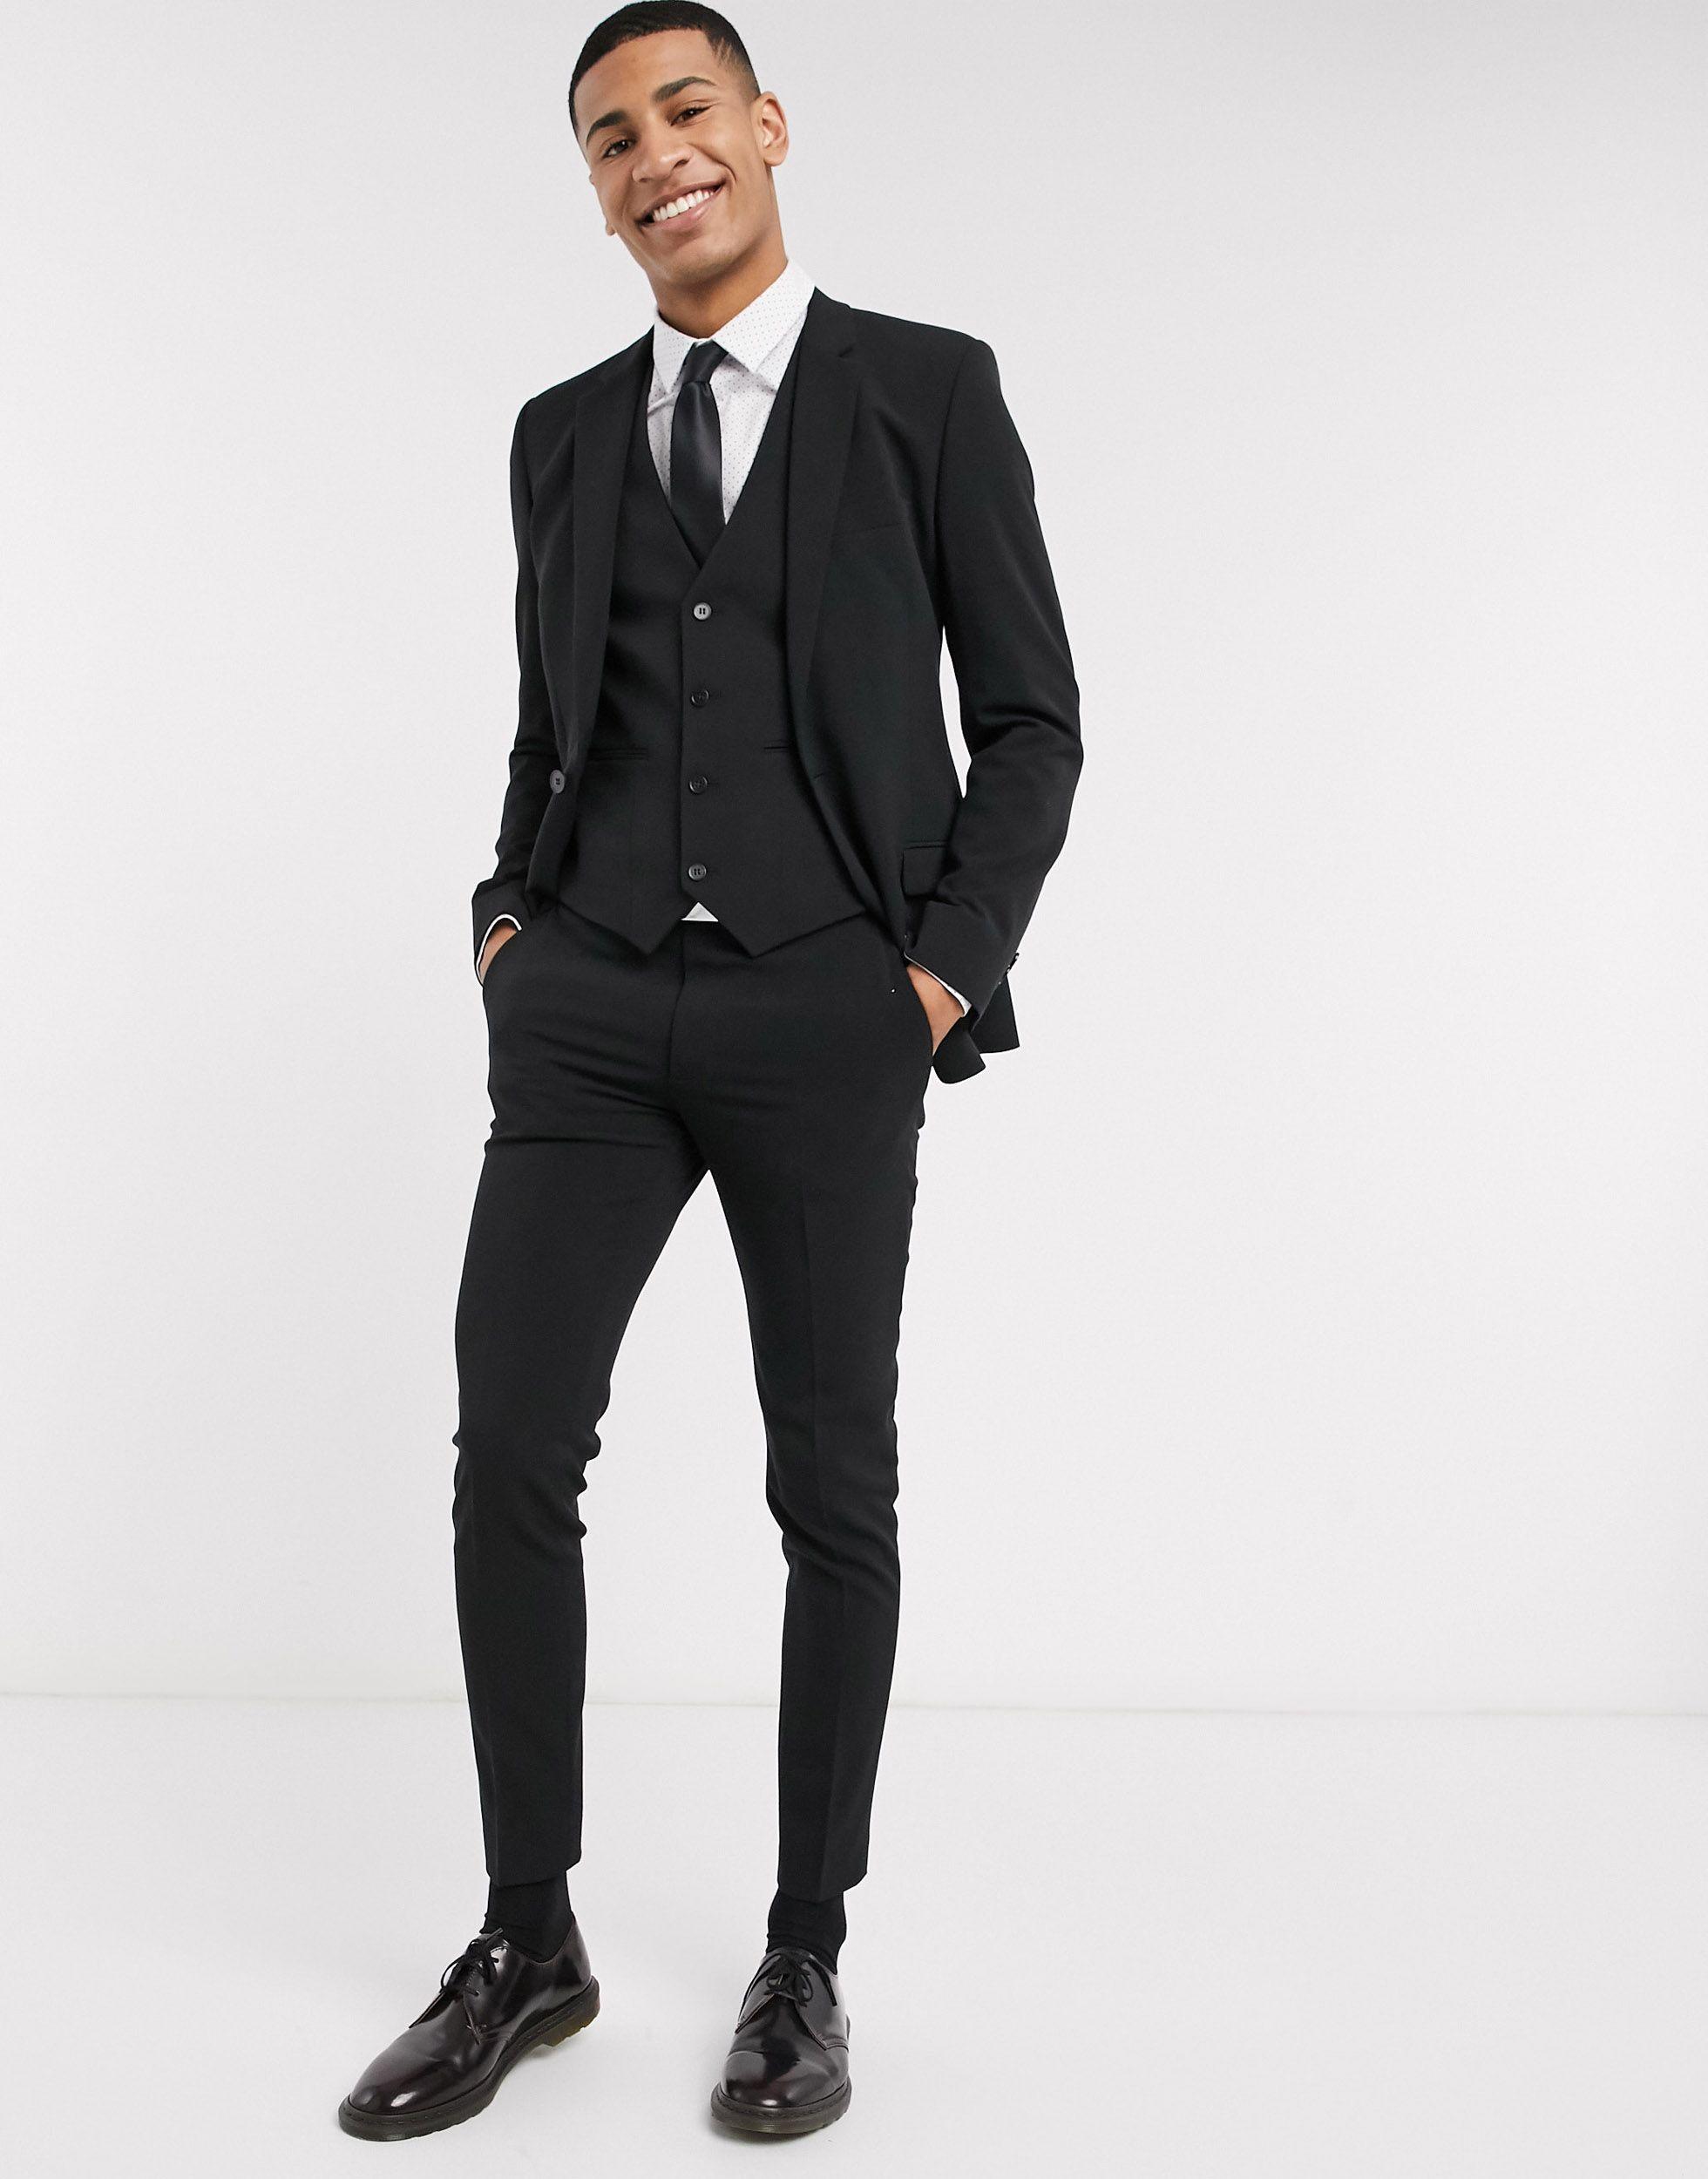 ASOS Synthetic Super Skinny Suit Waistcoat in Black for Men - Lyst